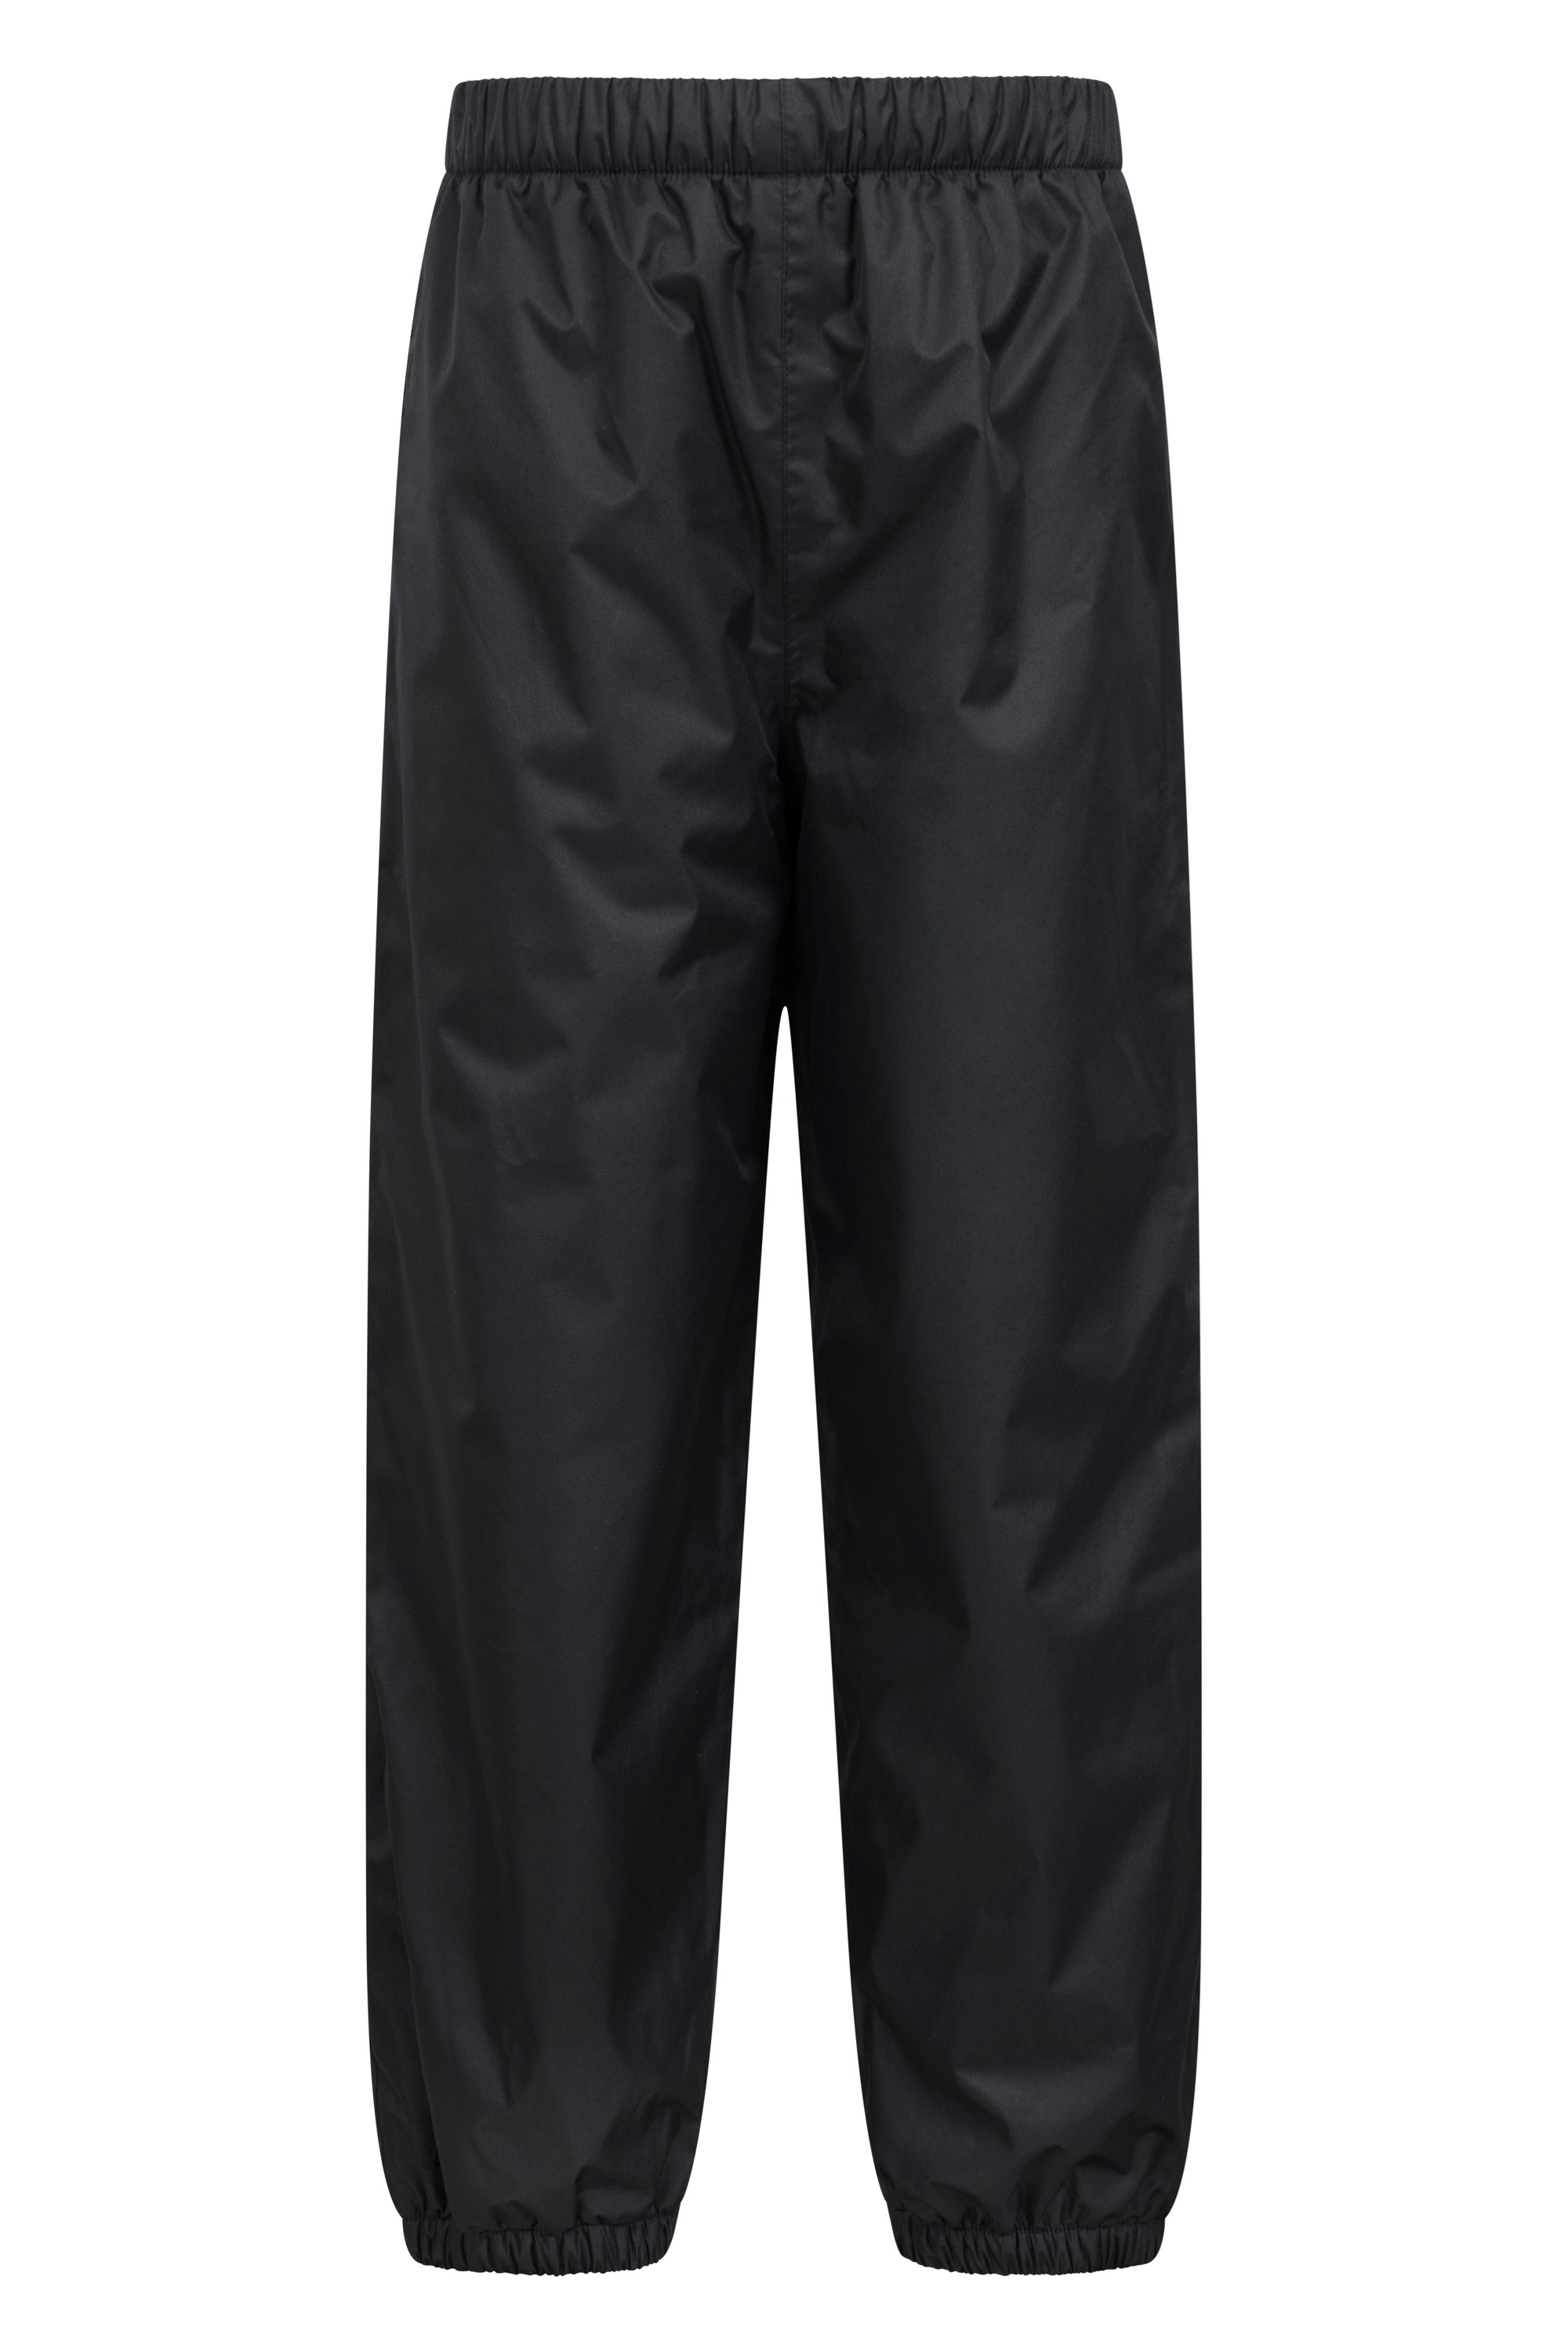 Men Fleece Lined Pants Waterproof Relaxed Fit Straight Cargo Hiking Ski  Trousers | eBay